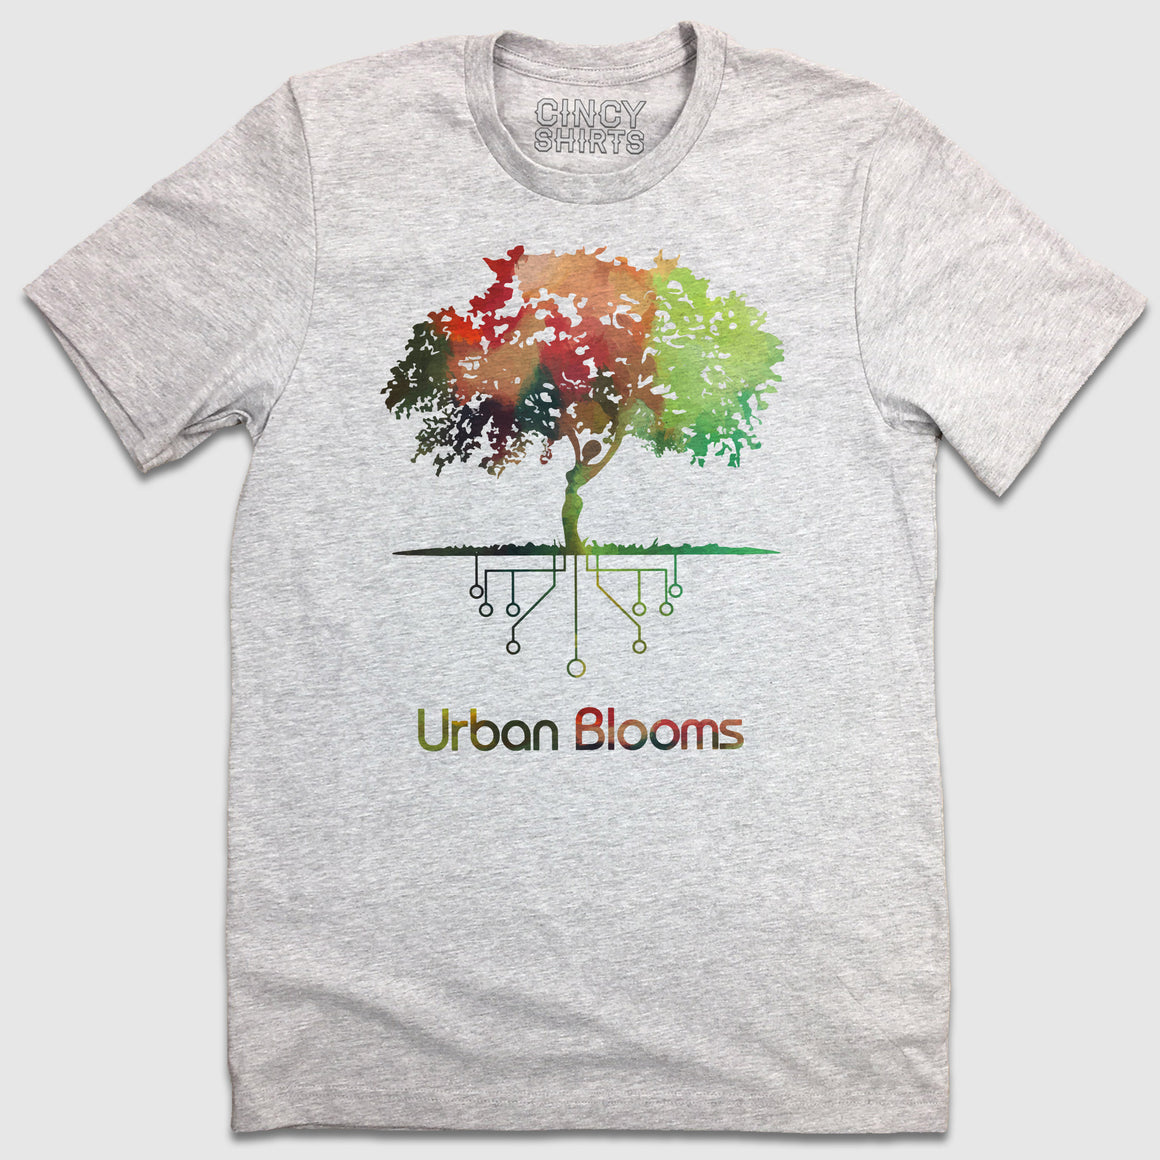 Urban Blooms - Cincy Shirts